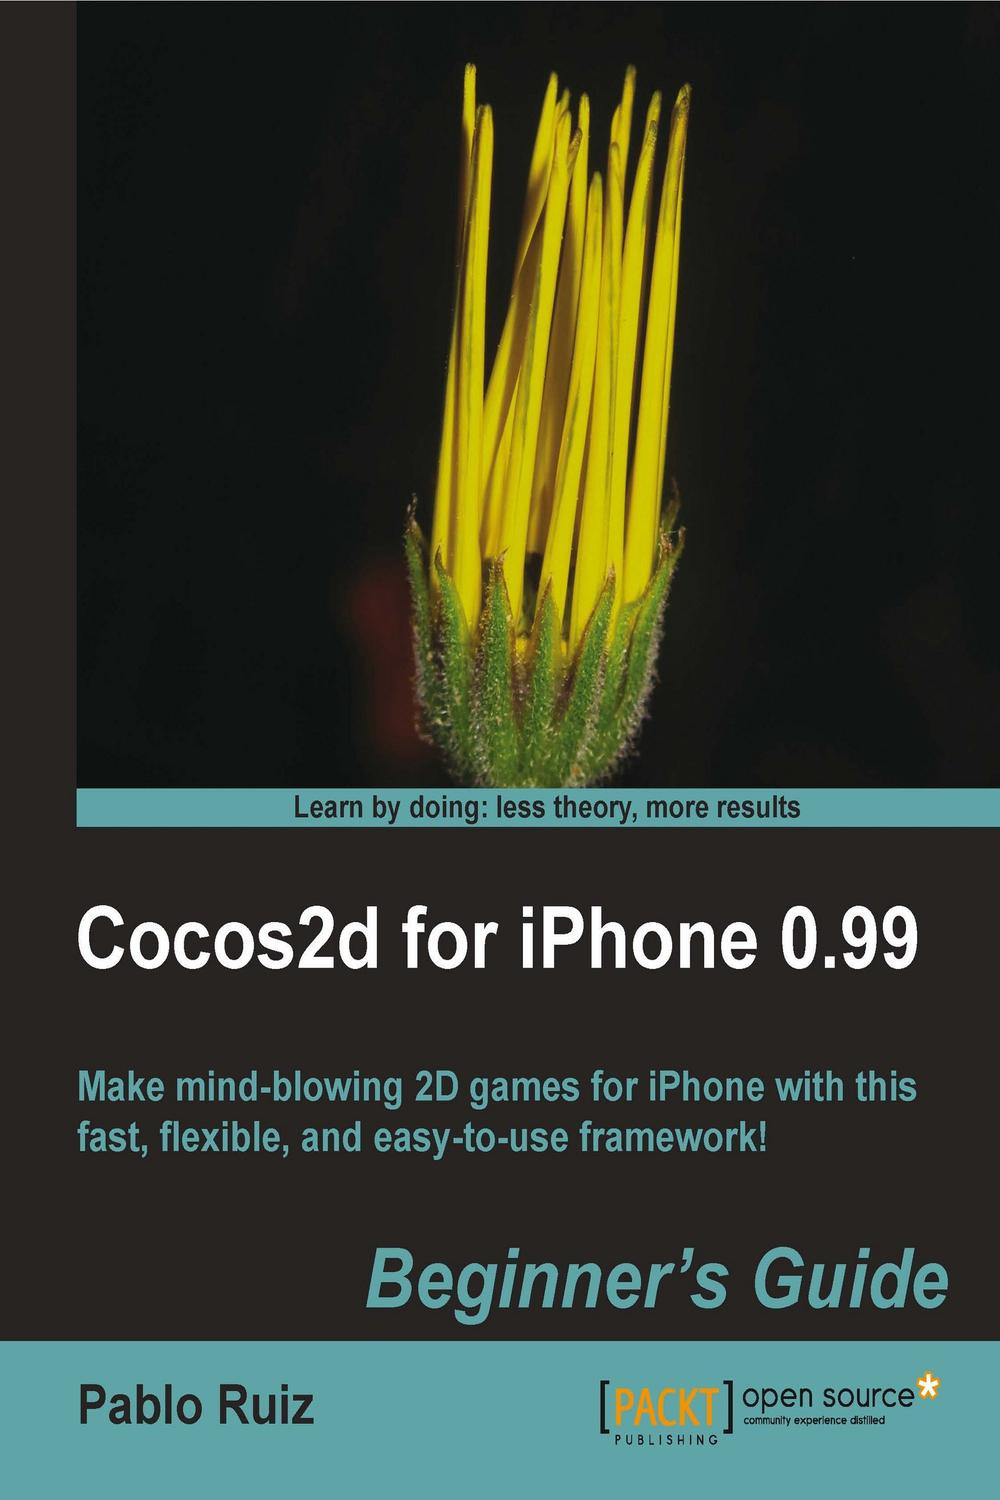 Cocos2d for iPhone 0.99 Beginner's Guide - Pablo Ruiz